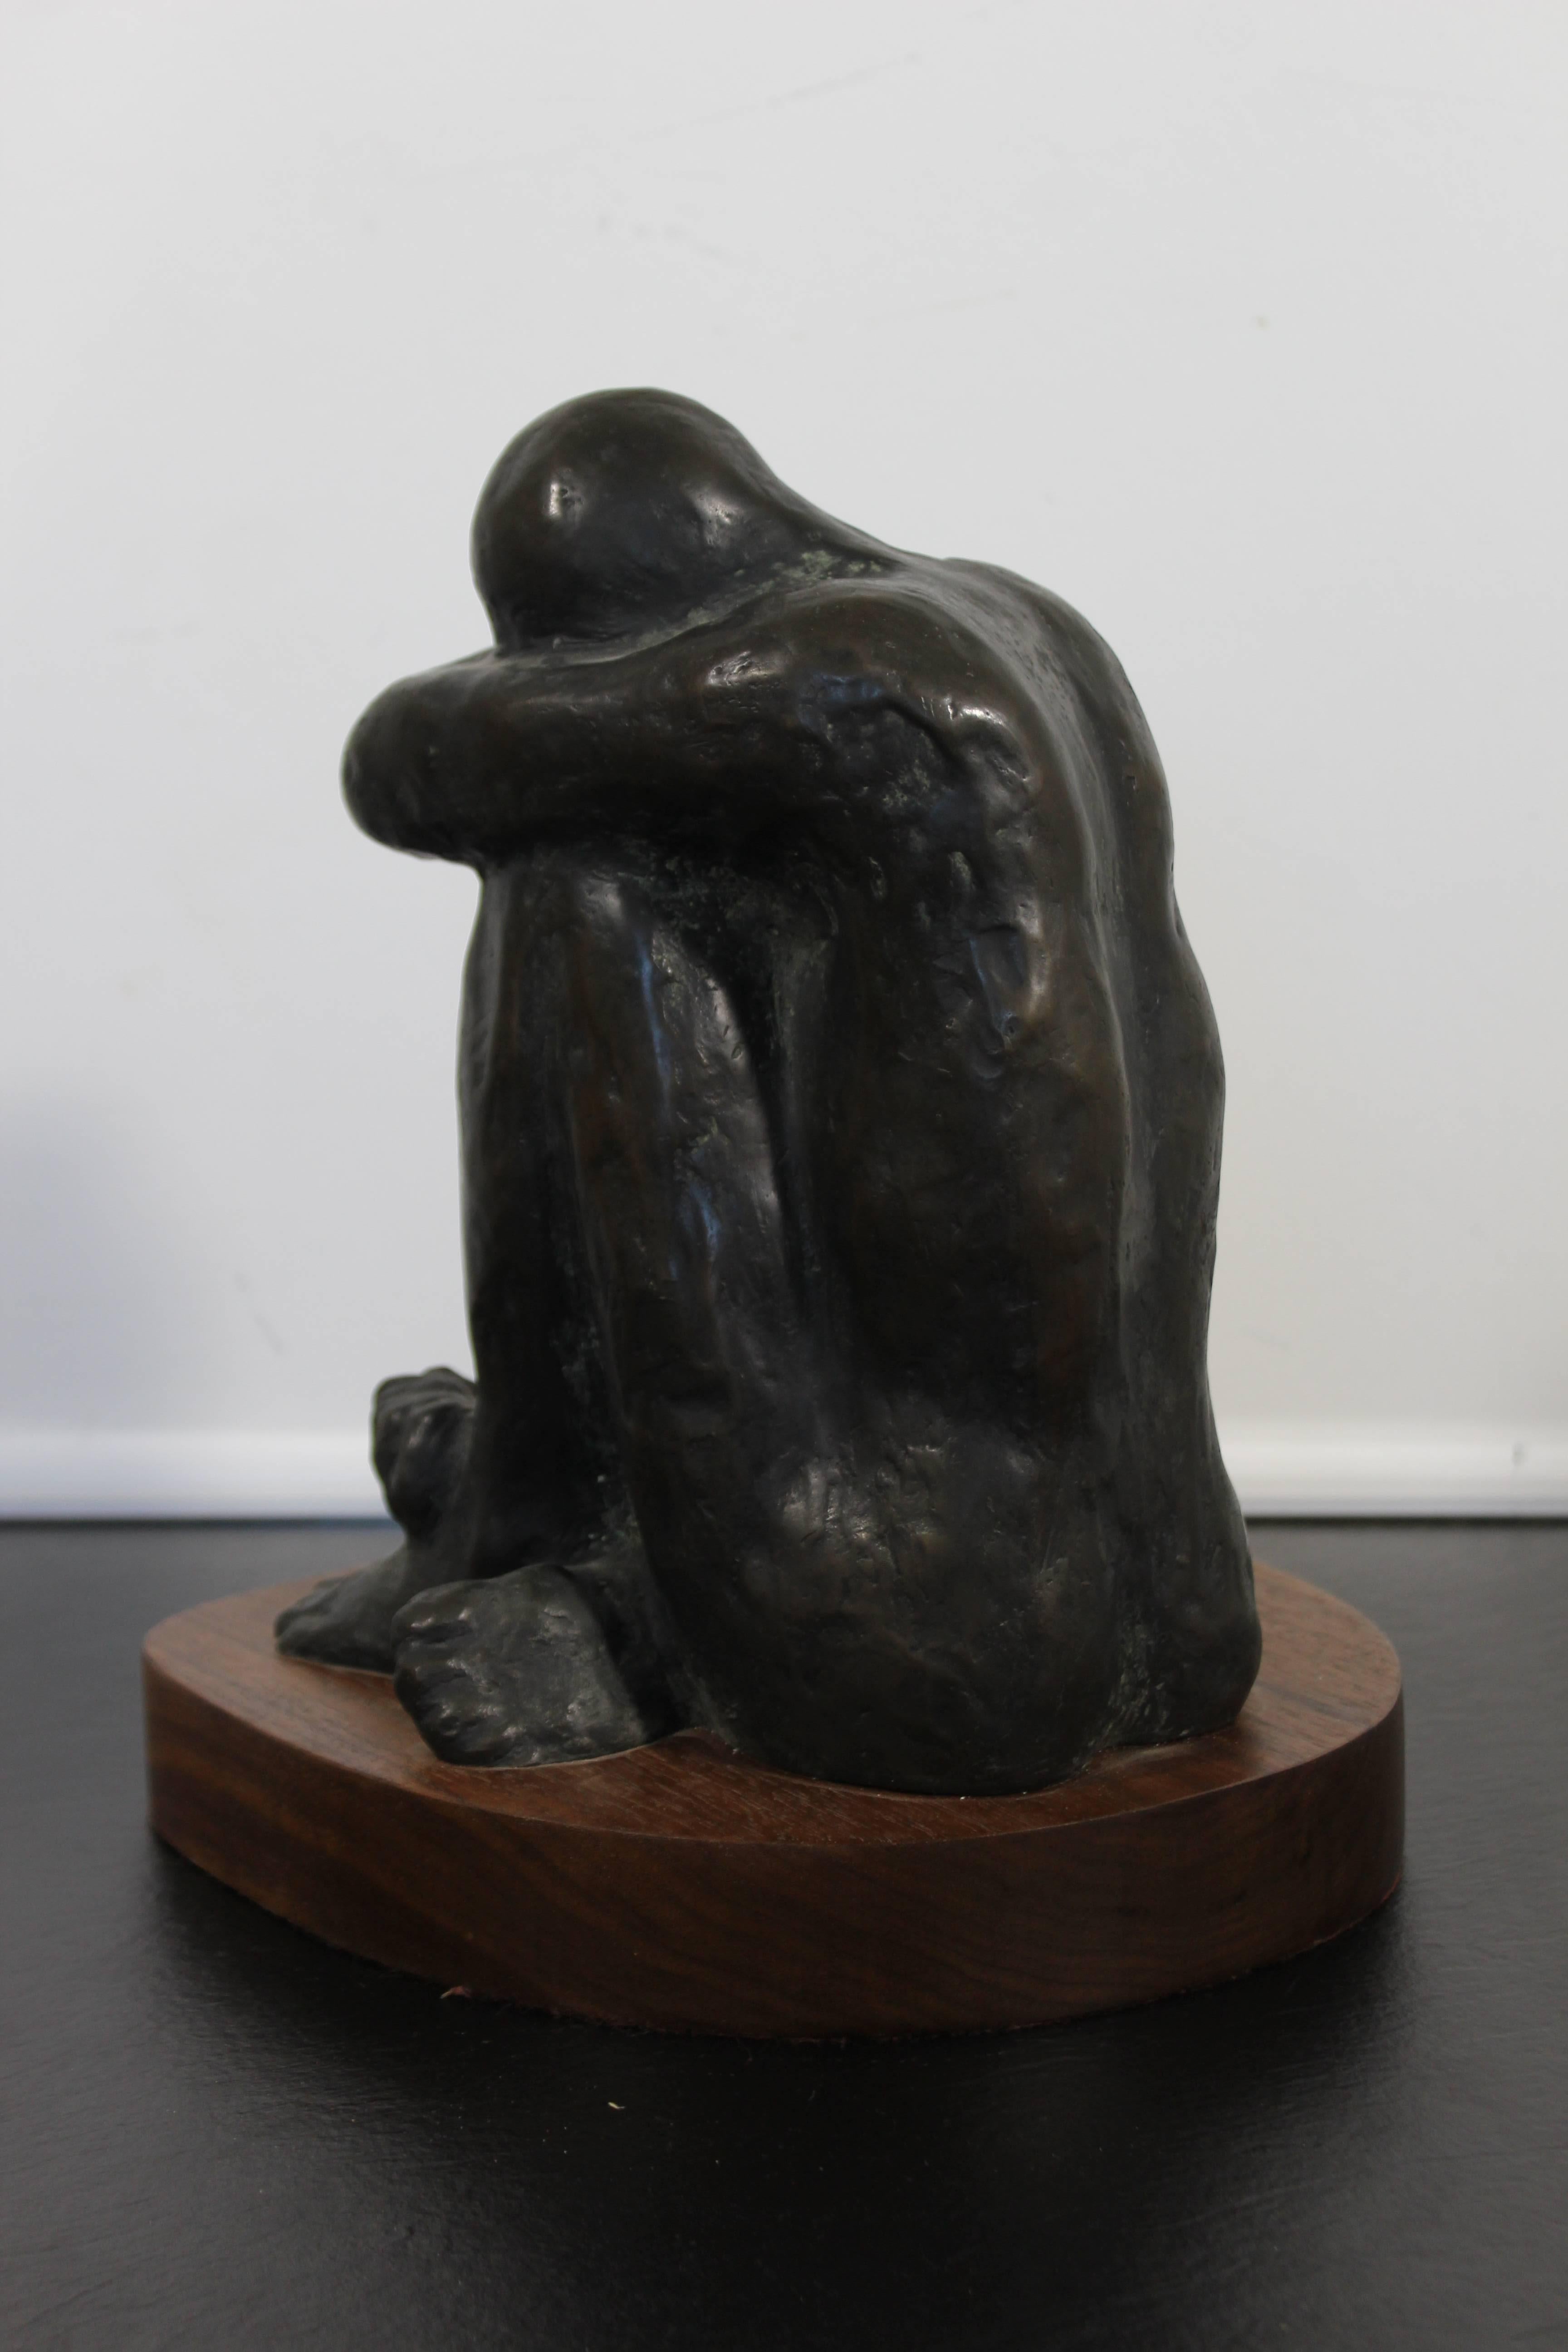 Despair Bronze Figurative Table Sculpture by Charles Masse 3/12, 1989 1